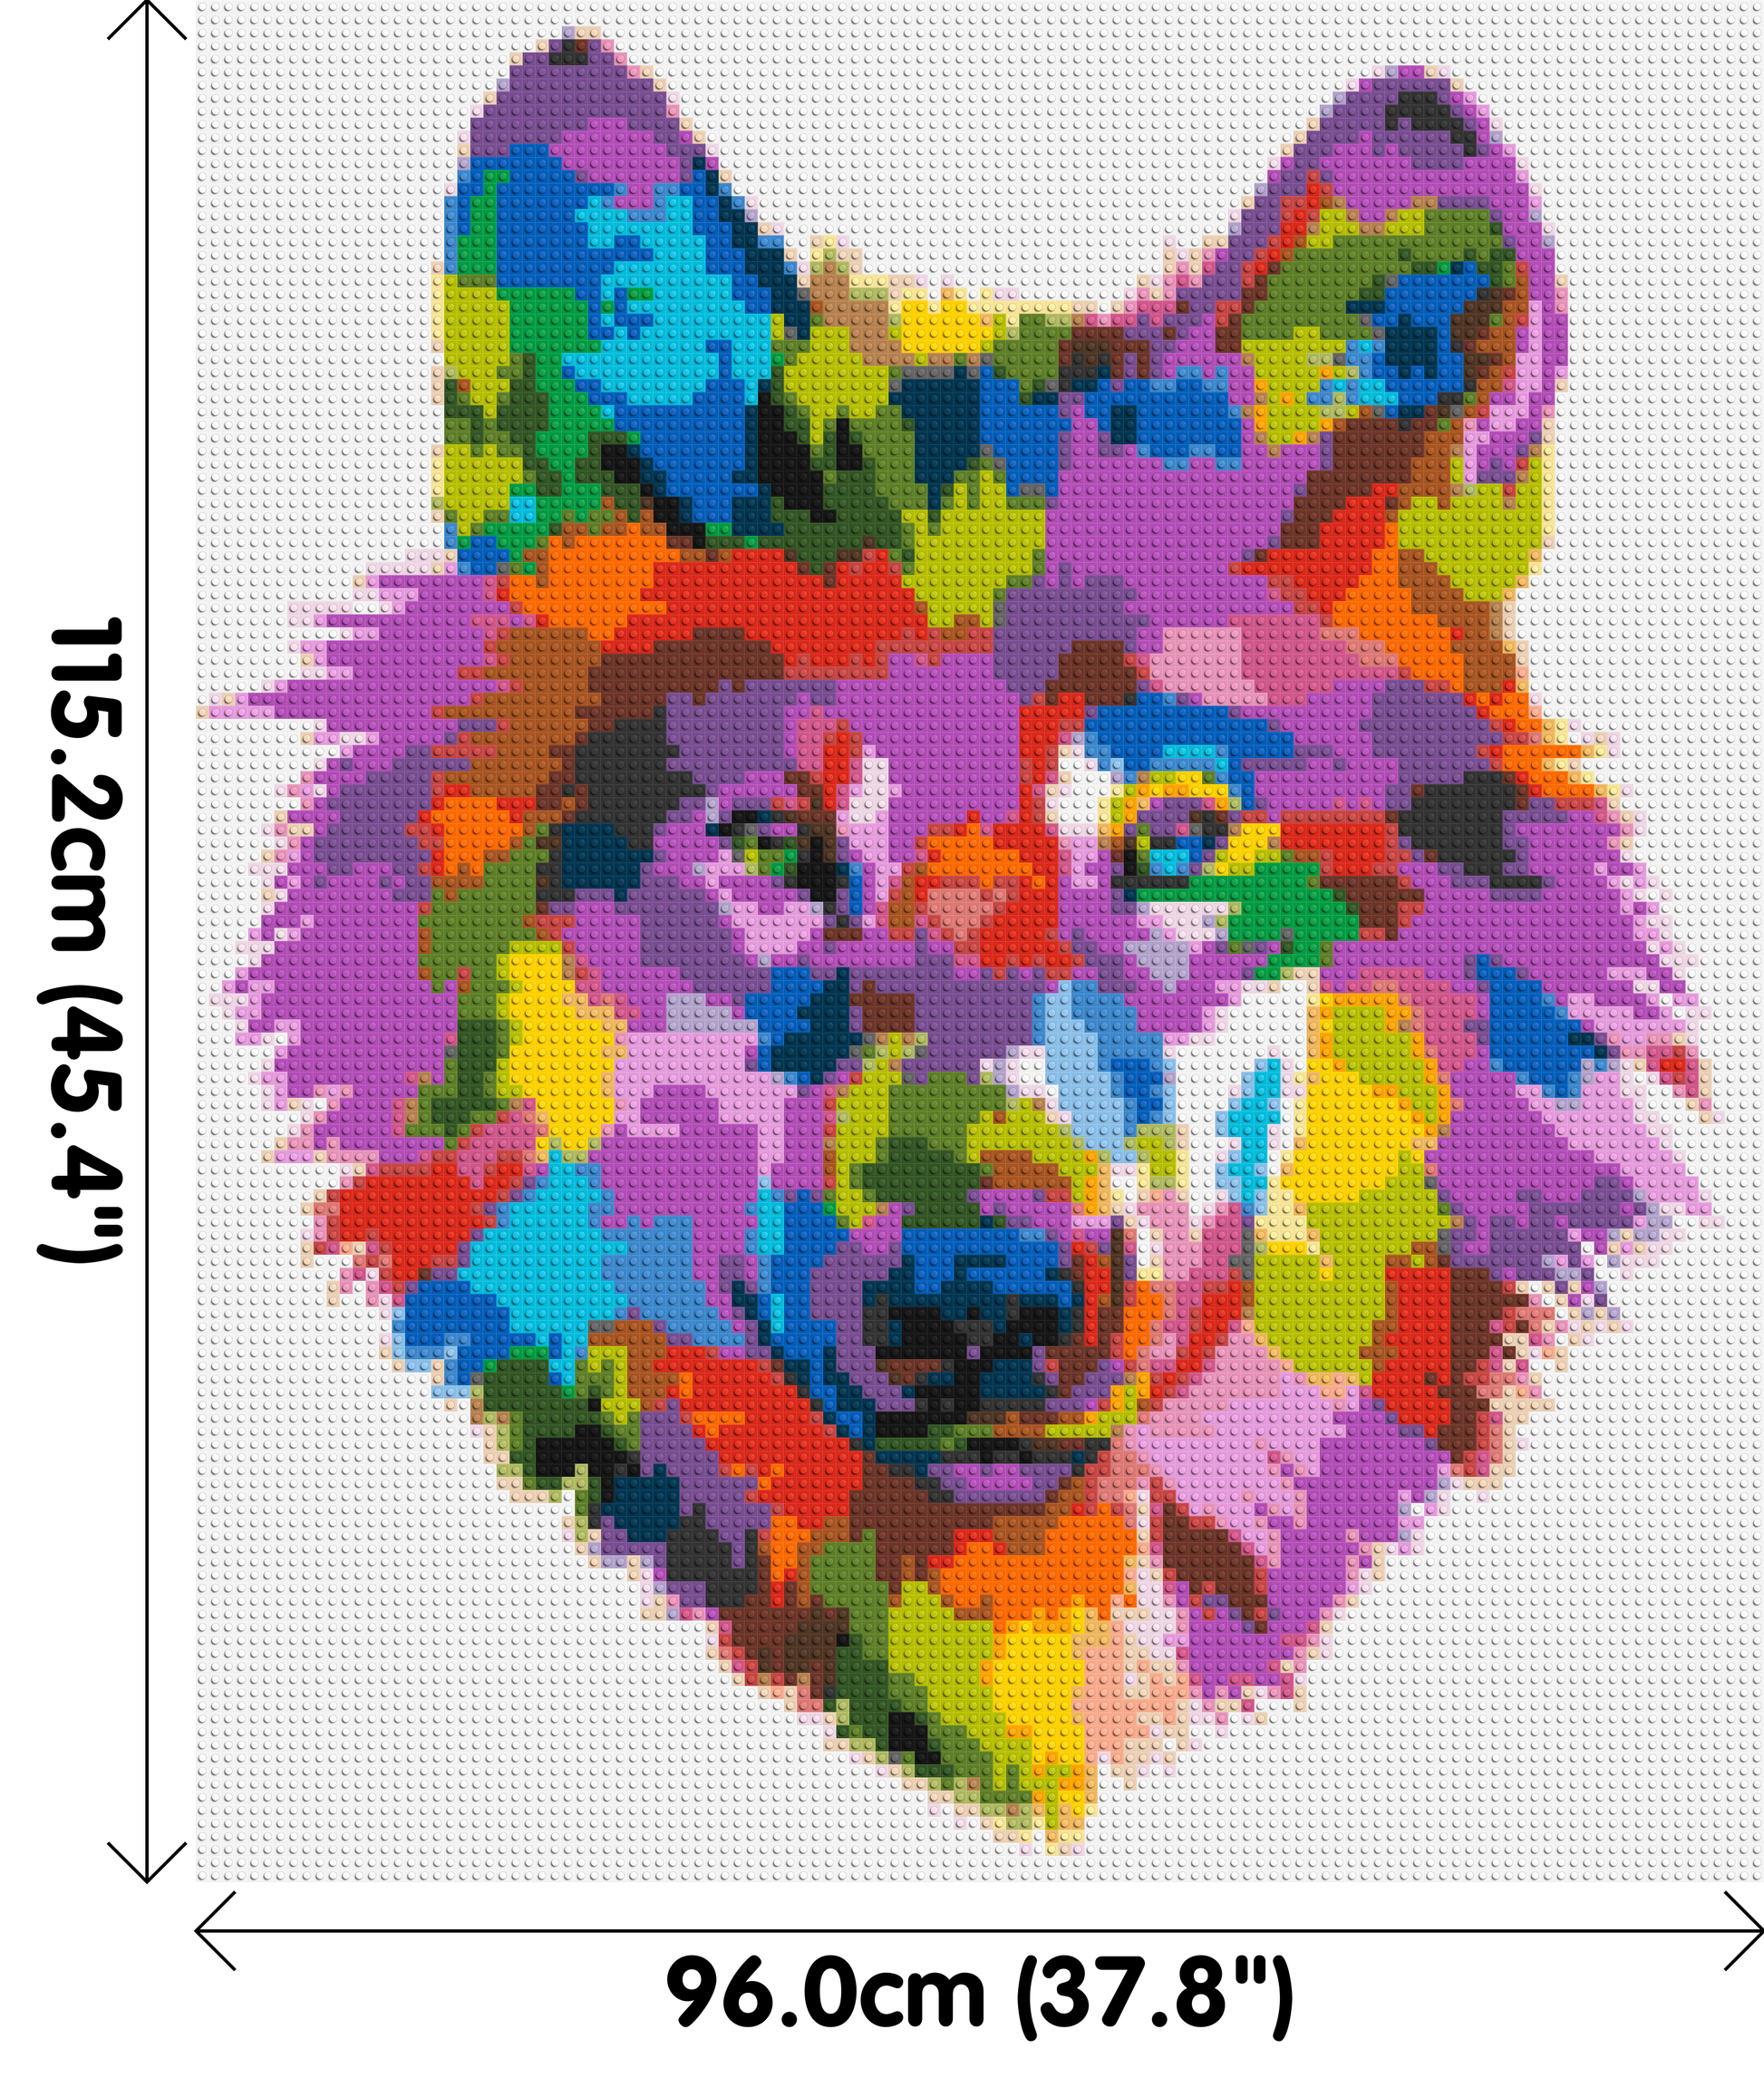 Wolf Colourful Pop Art - Brick Art Mosaic Kit 5x6 dimensions